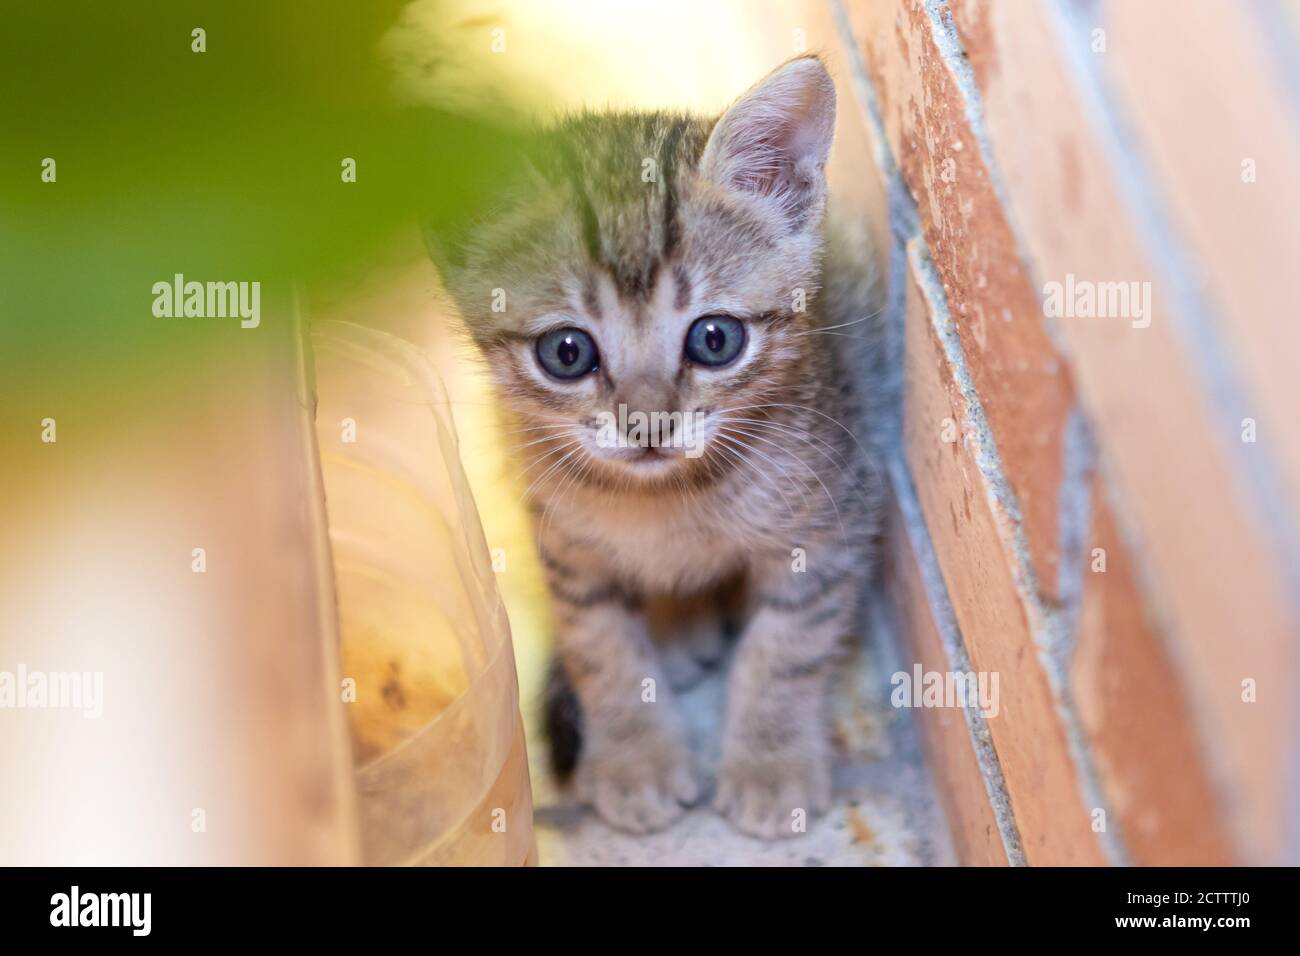 Cute newborn kitten with grey eyes Stock Photo